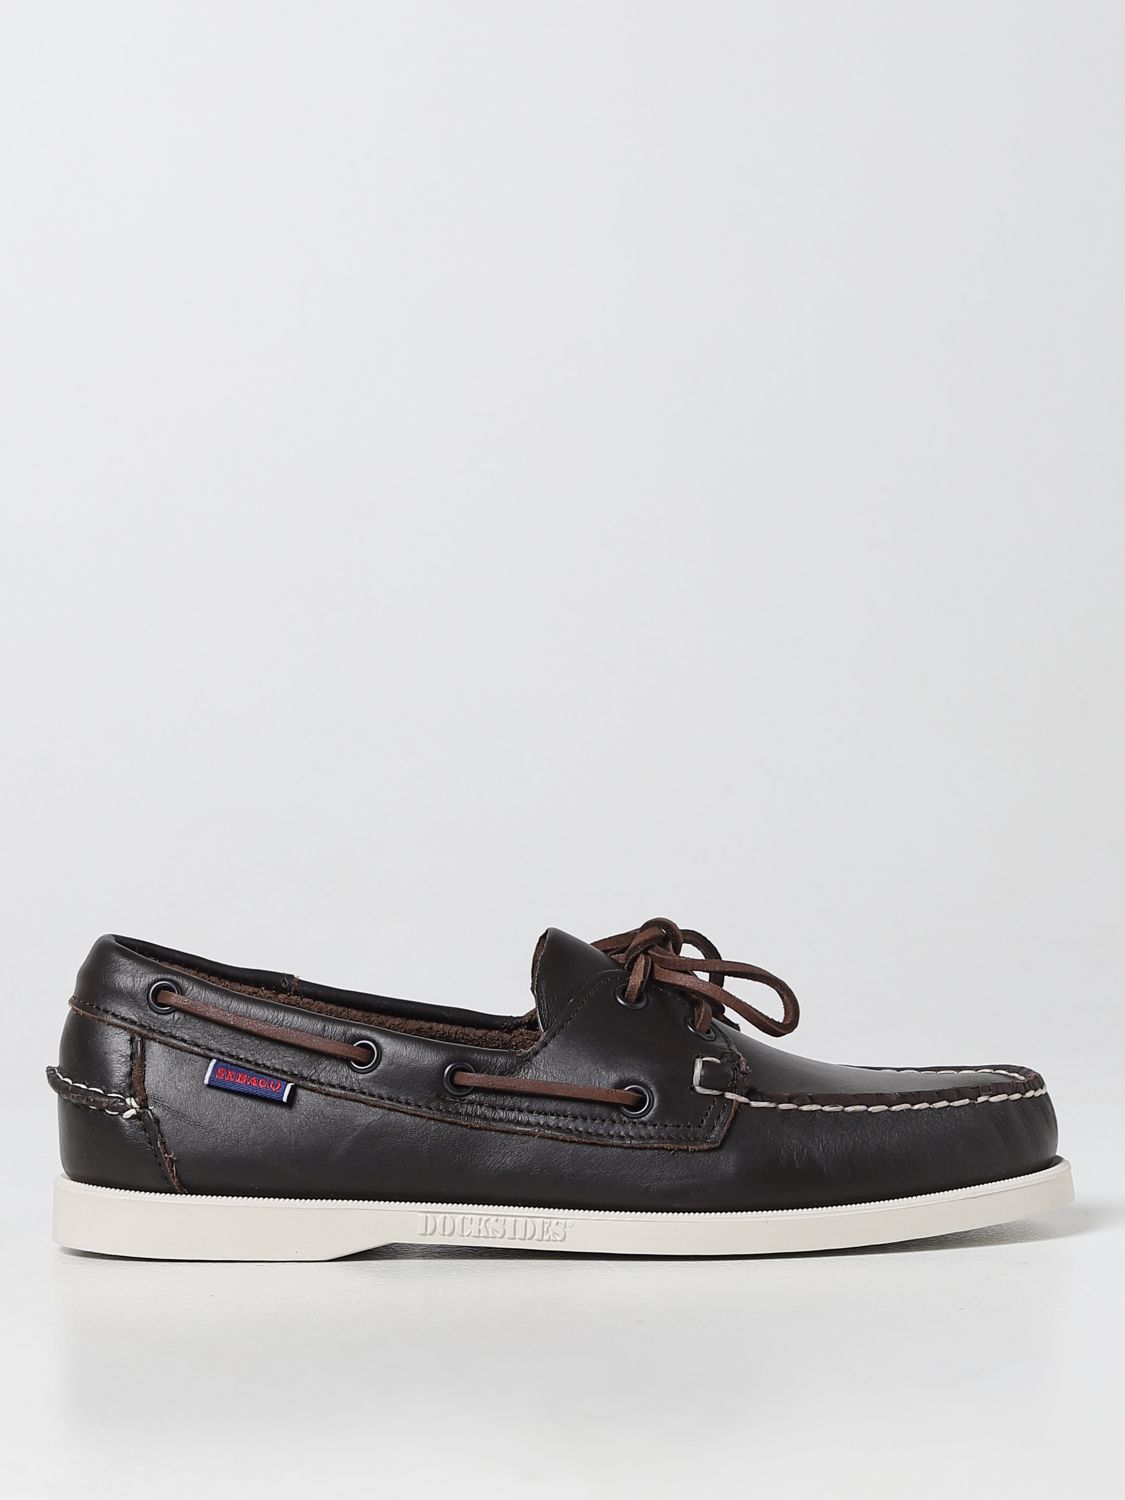 SEBAGO: loafers for man - Leather | Sebago loafers 7000H00 online on ...